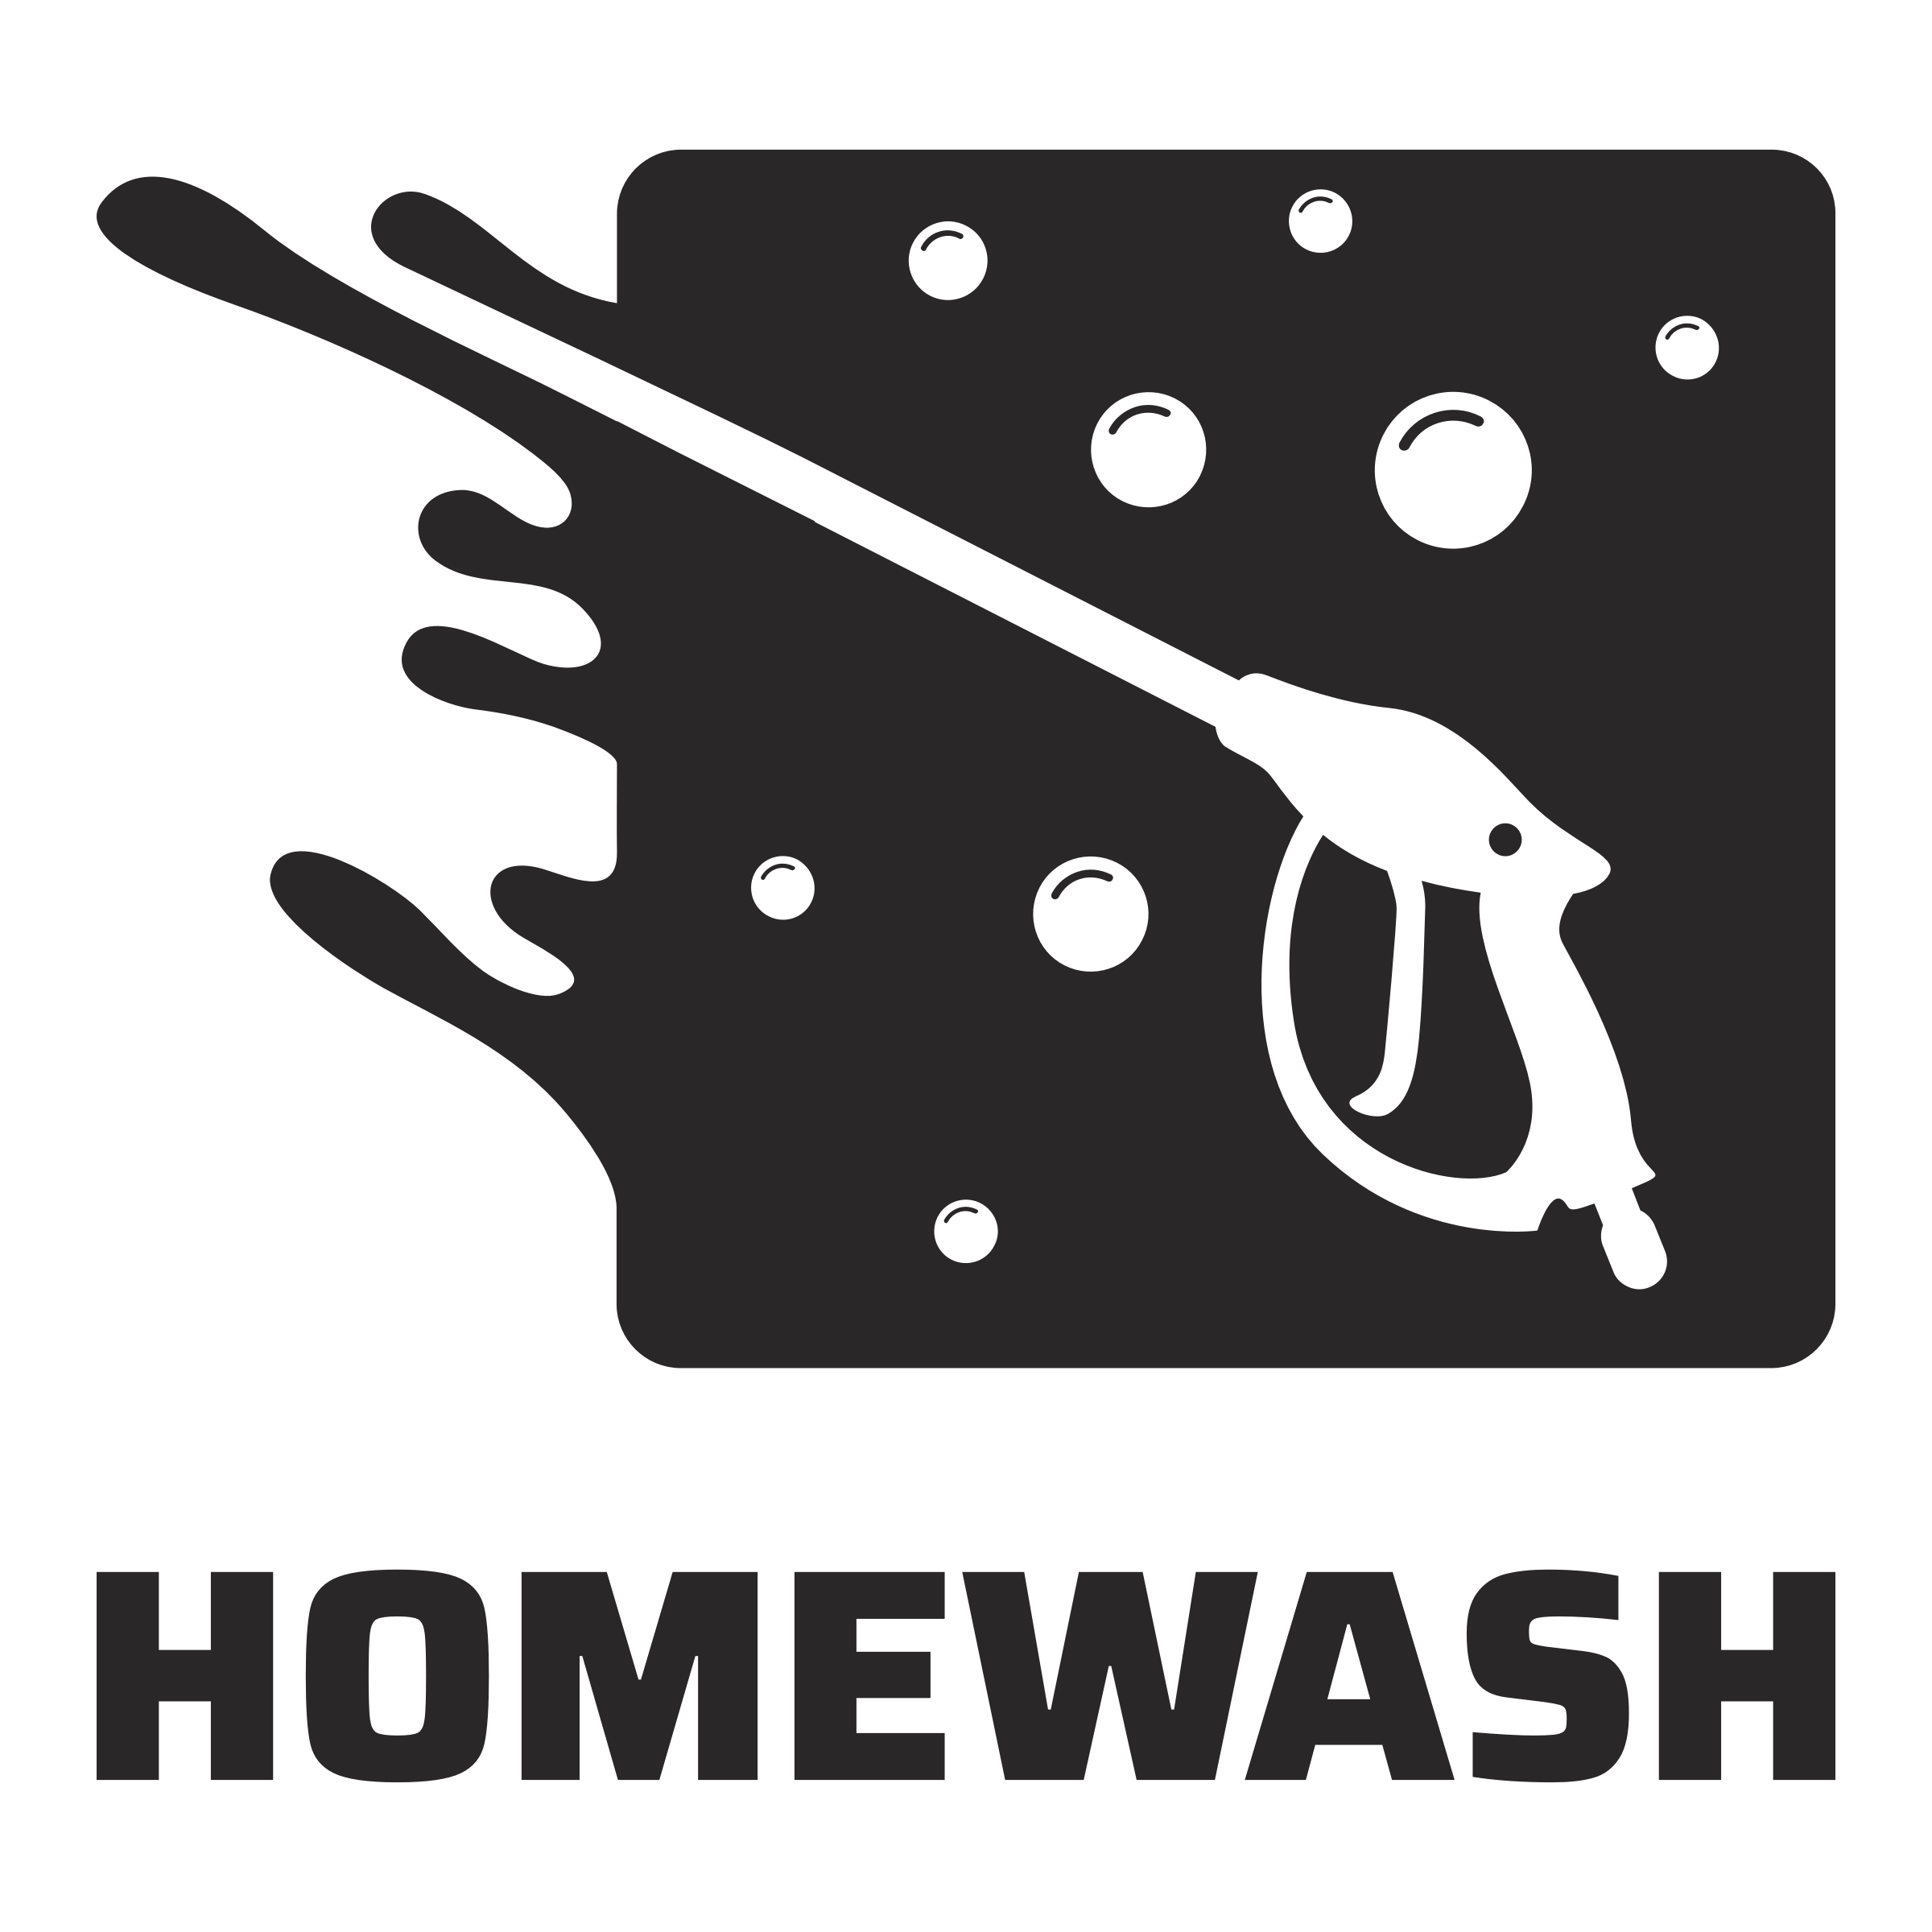 100% free pressure washing happy house logos